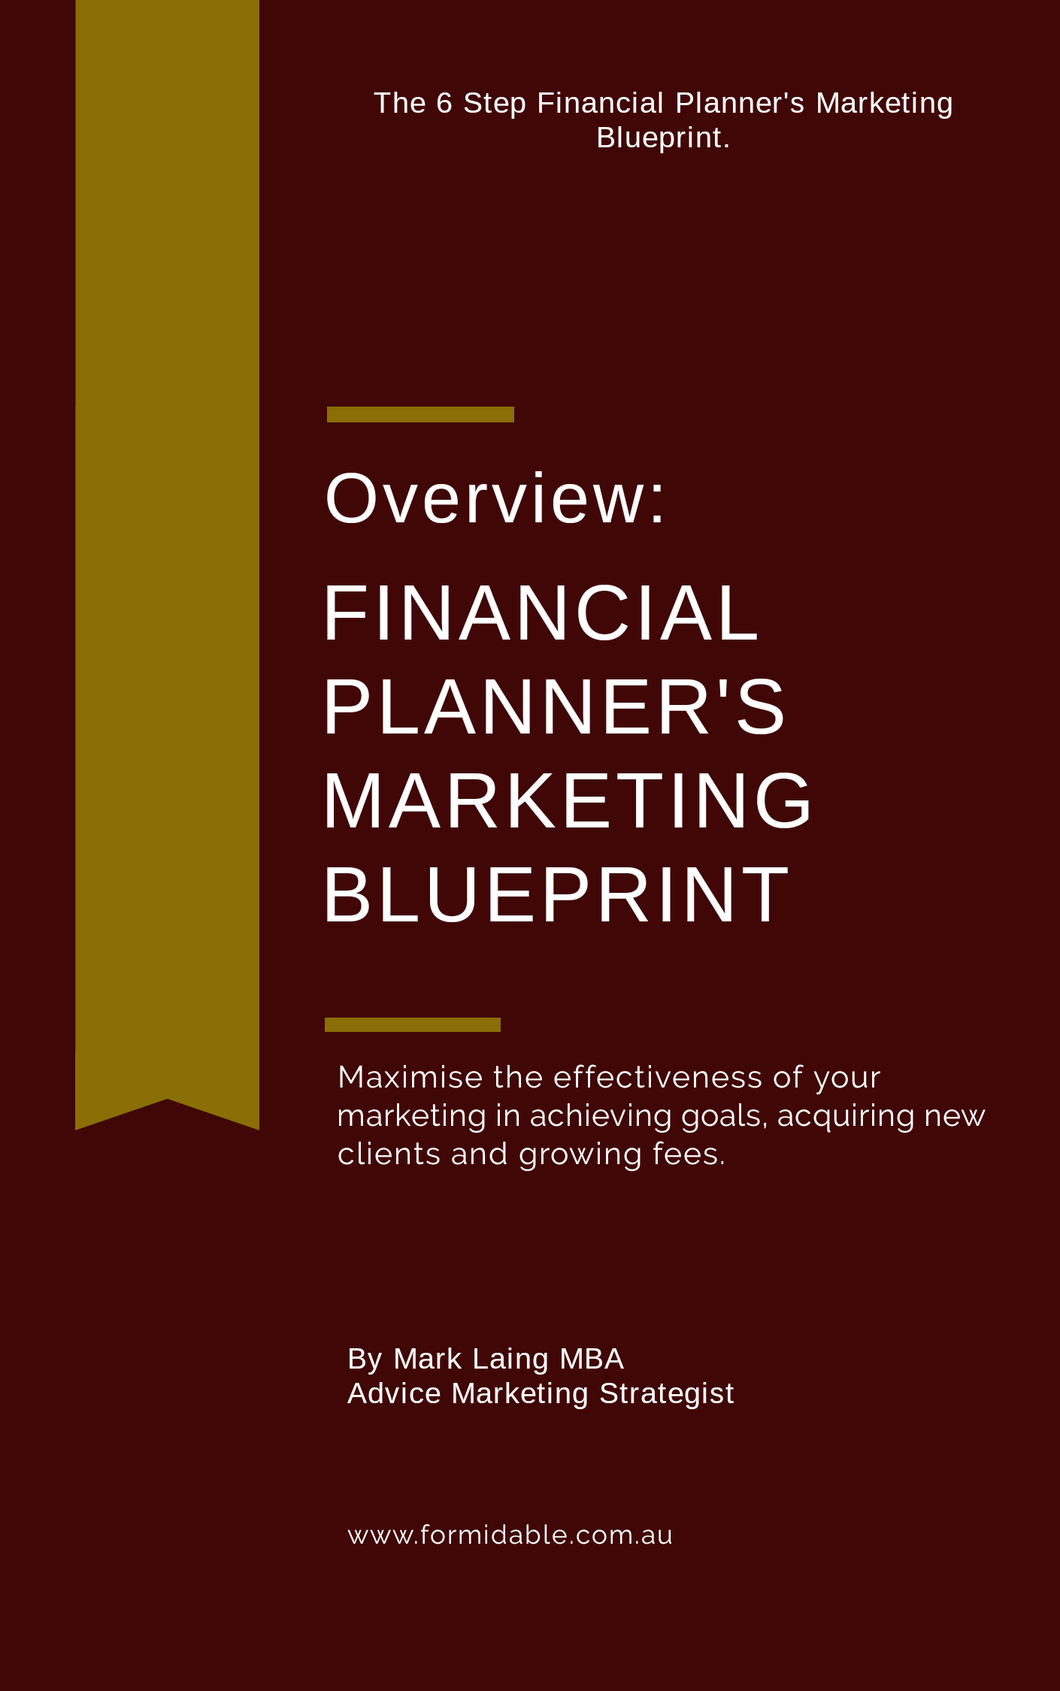 Financial Planner's Marketing Blueprint (free)